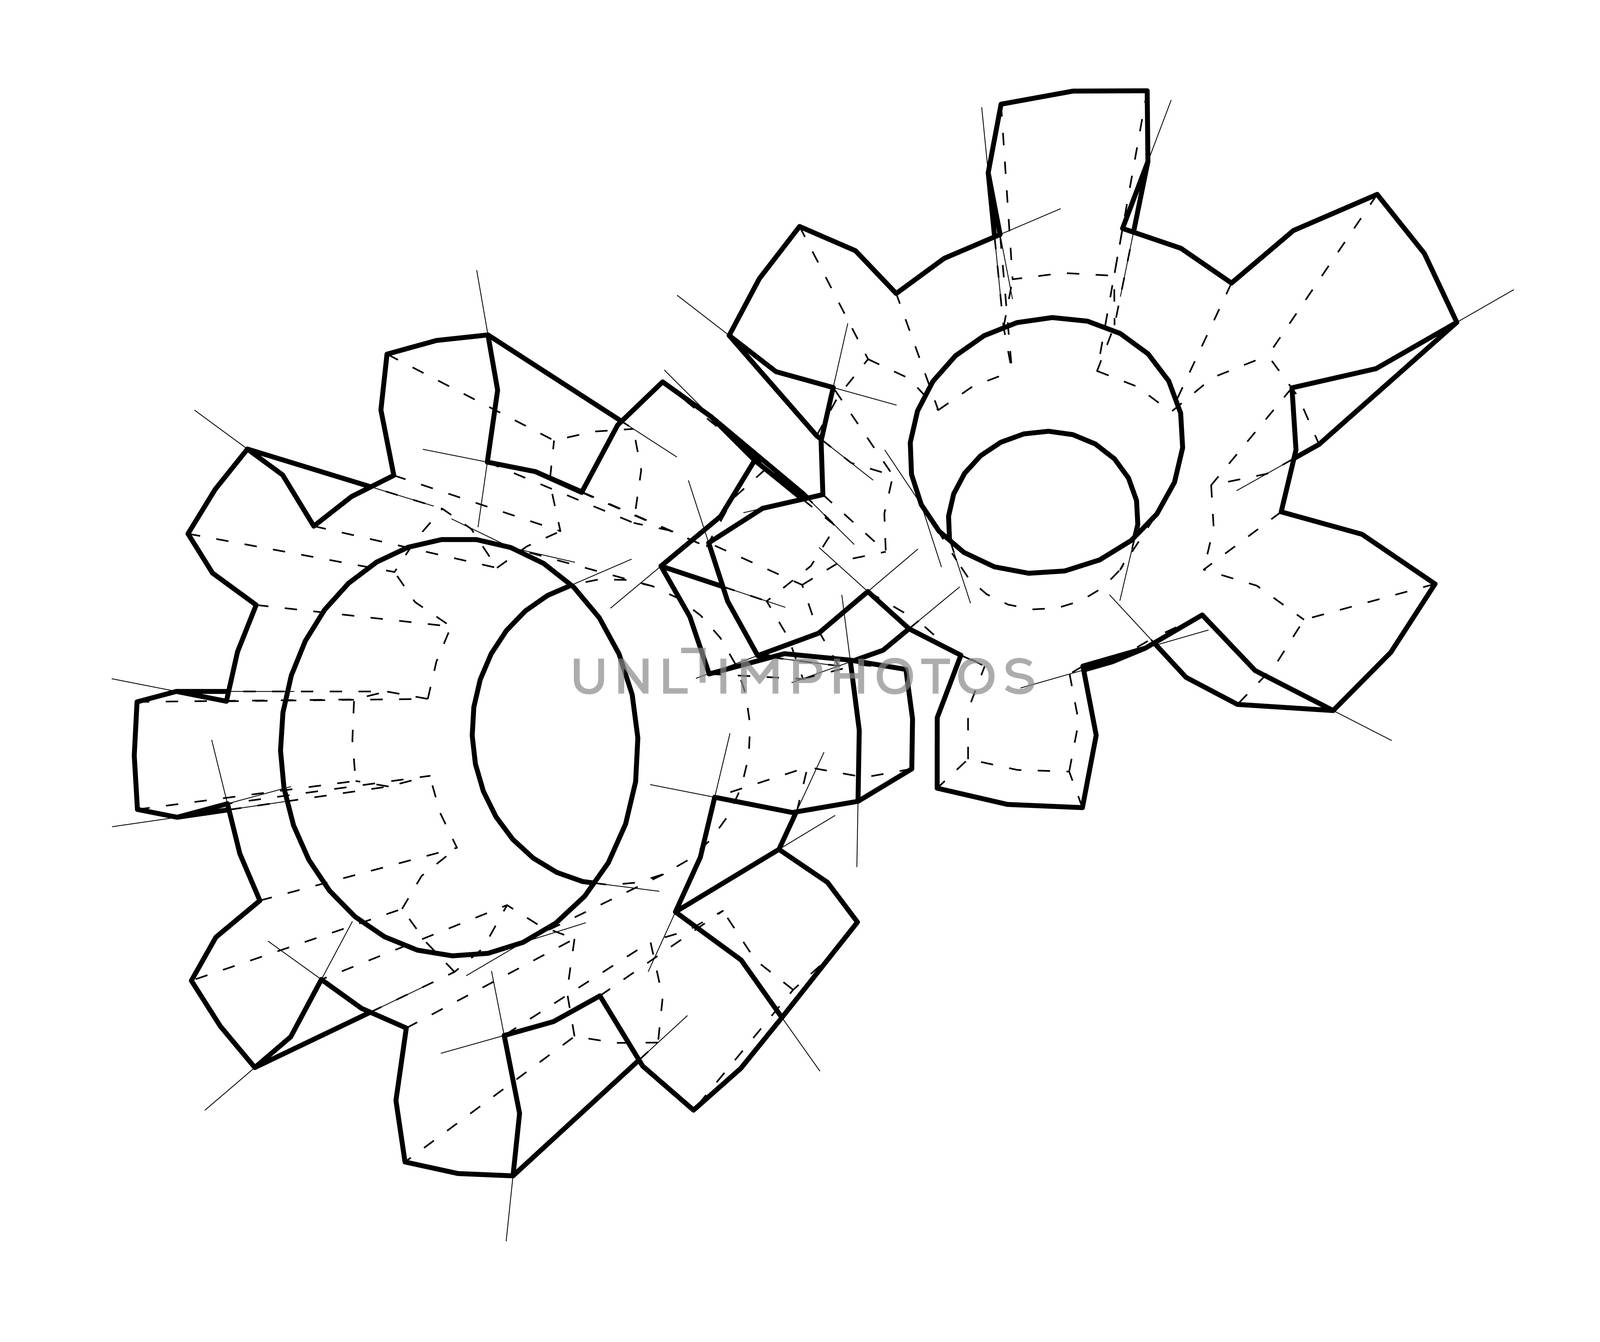 3D gear wheel. 3d illustration. Wire-frame style